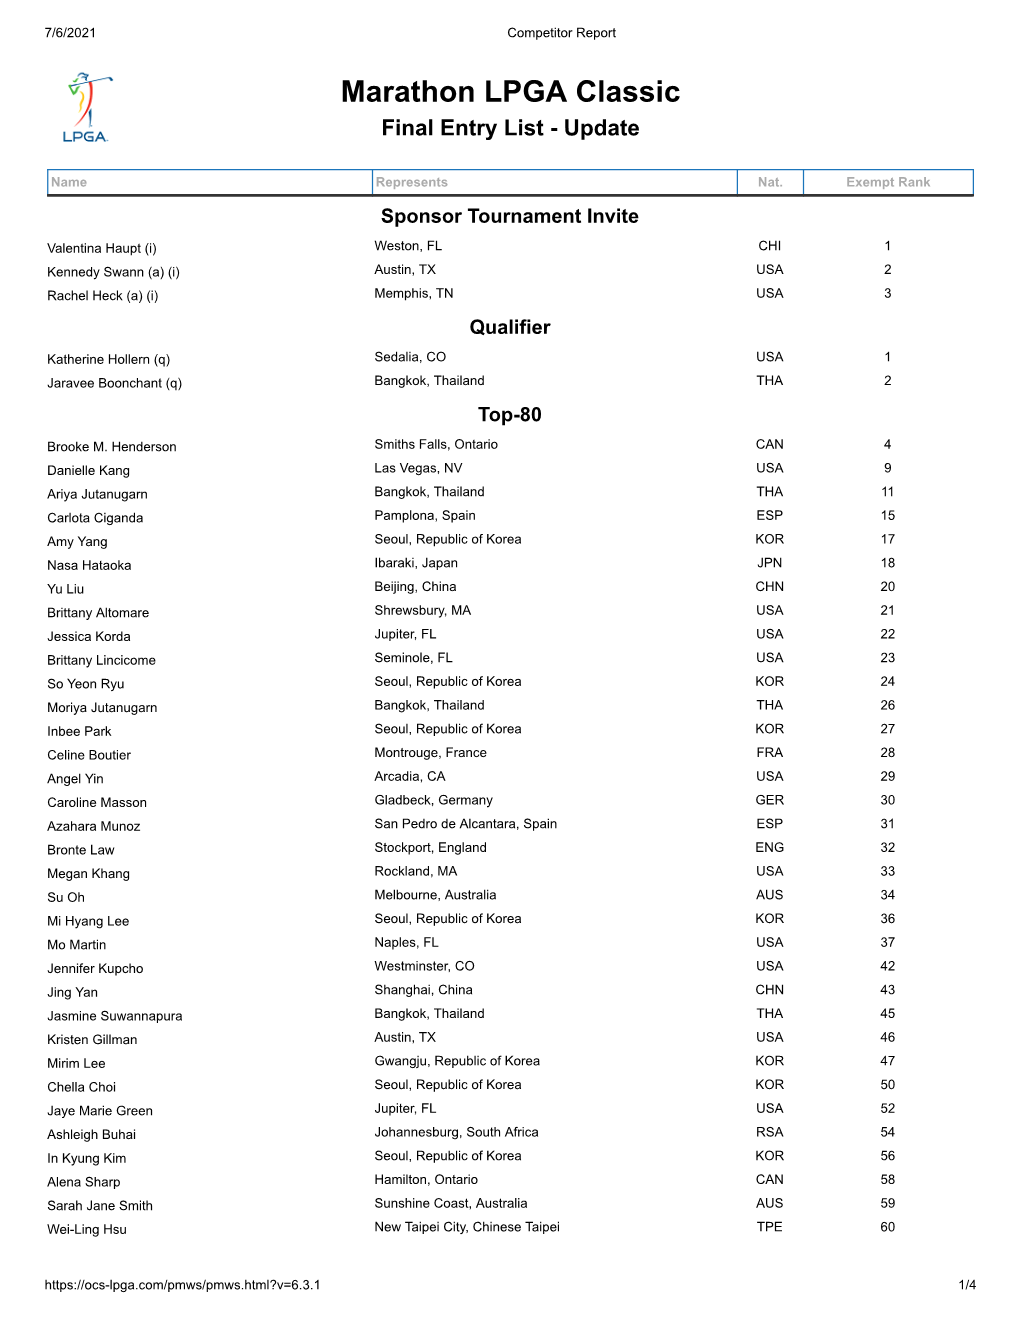 Marathon LPGA Classic Final Entry List - Update